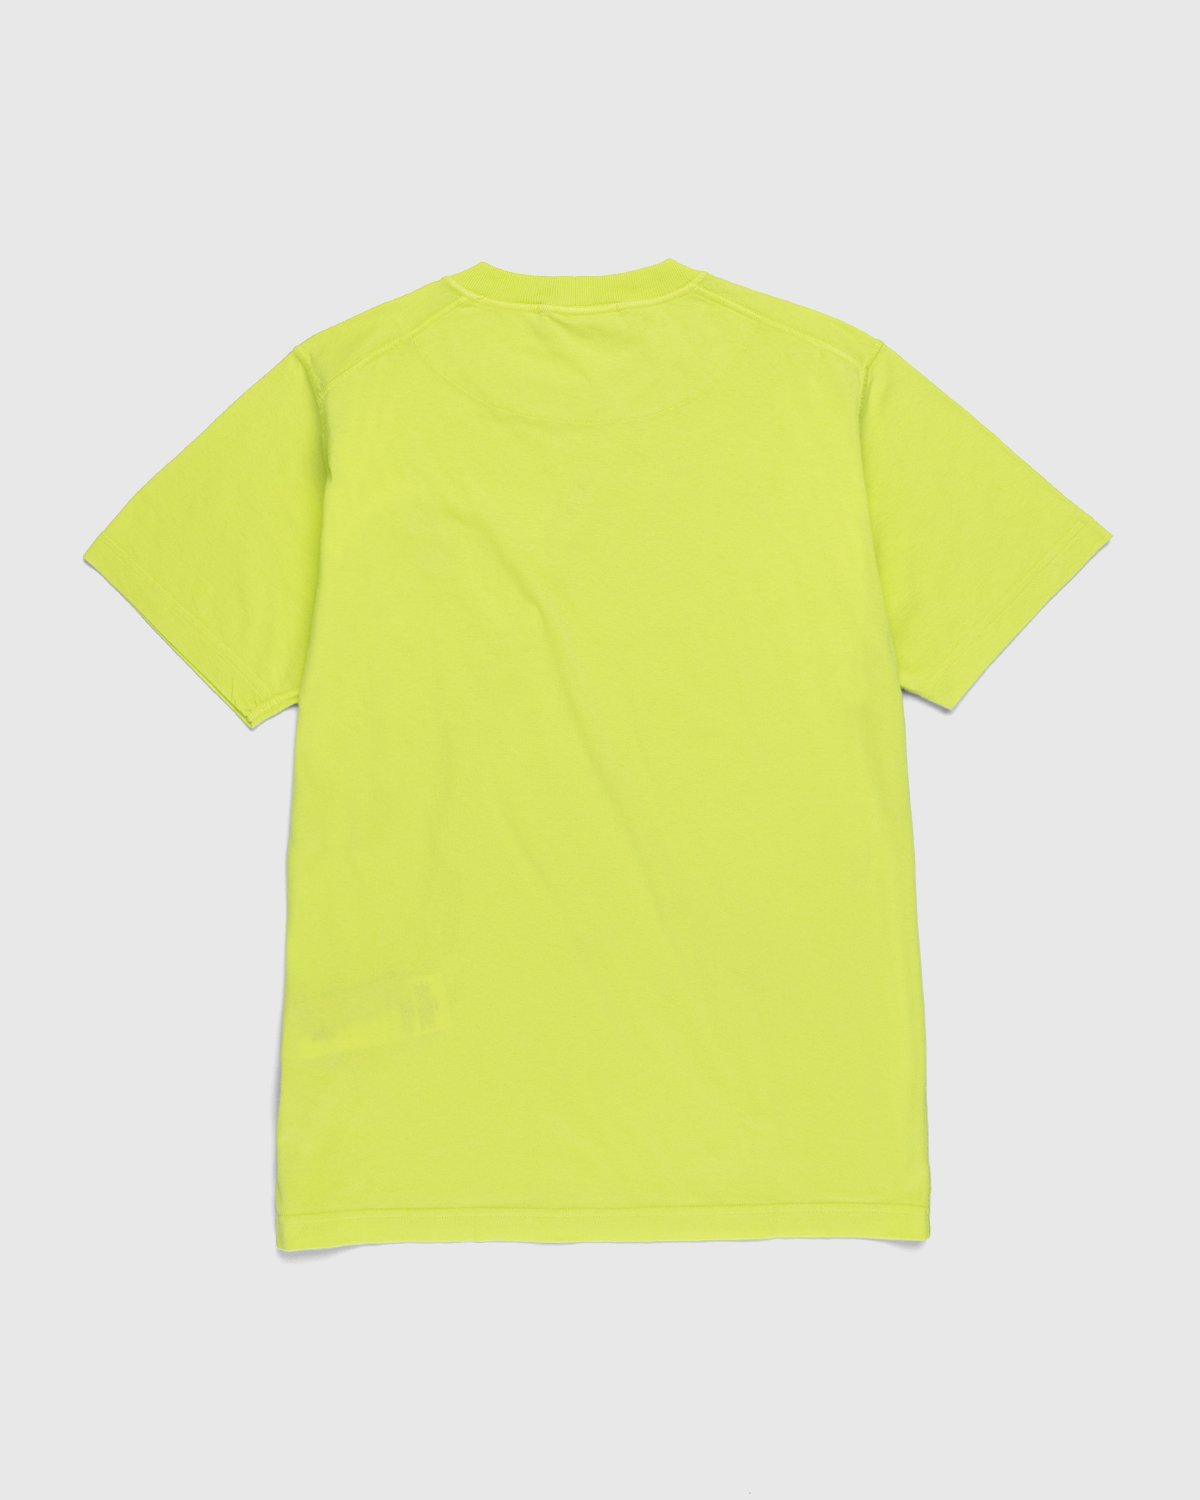 Stone Island - 23757 Garment-Dyed Fissato T-Shirt Lemon - Clothing - Yellow - Image 2